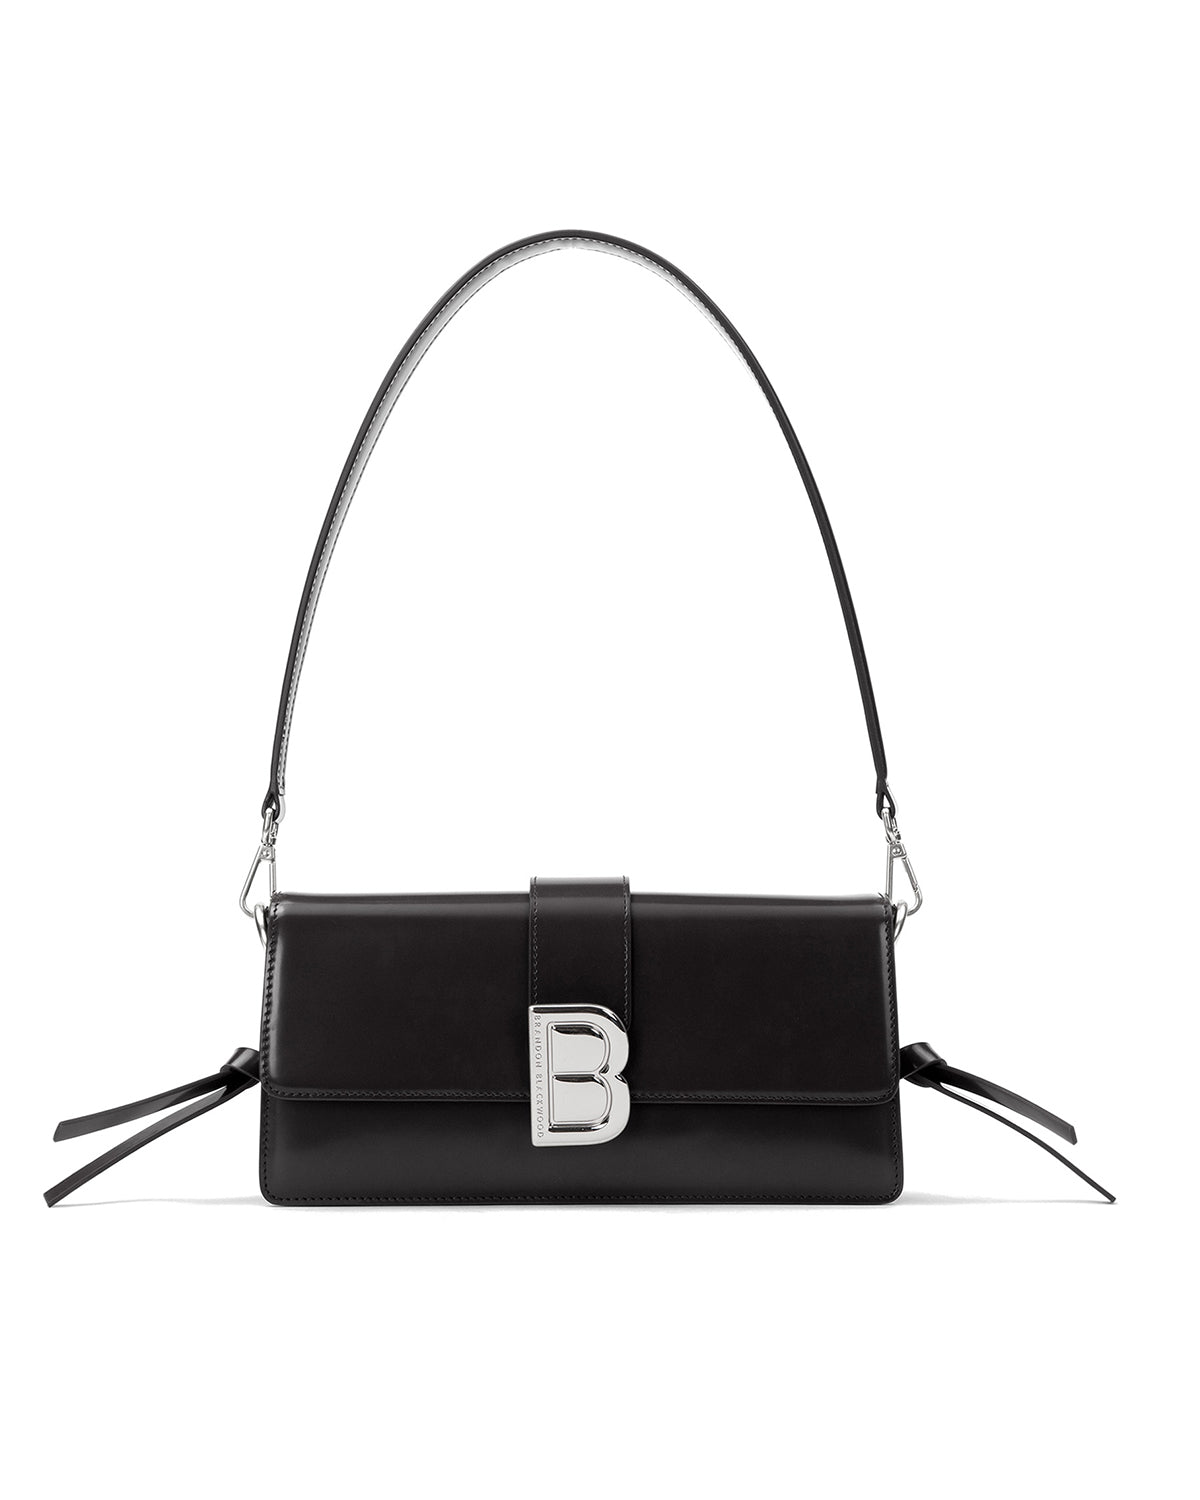 Brandon Blackwood New York - Nia Bag - Black Hard Leather w/ Silver Hardware